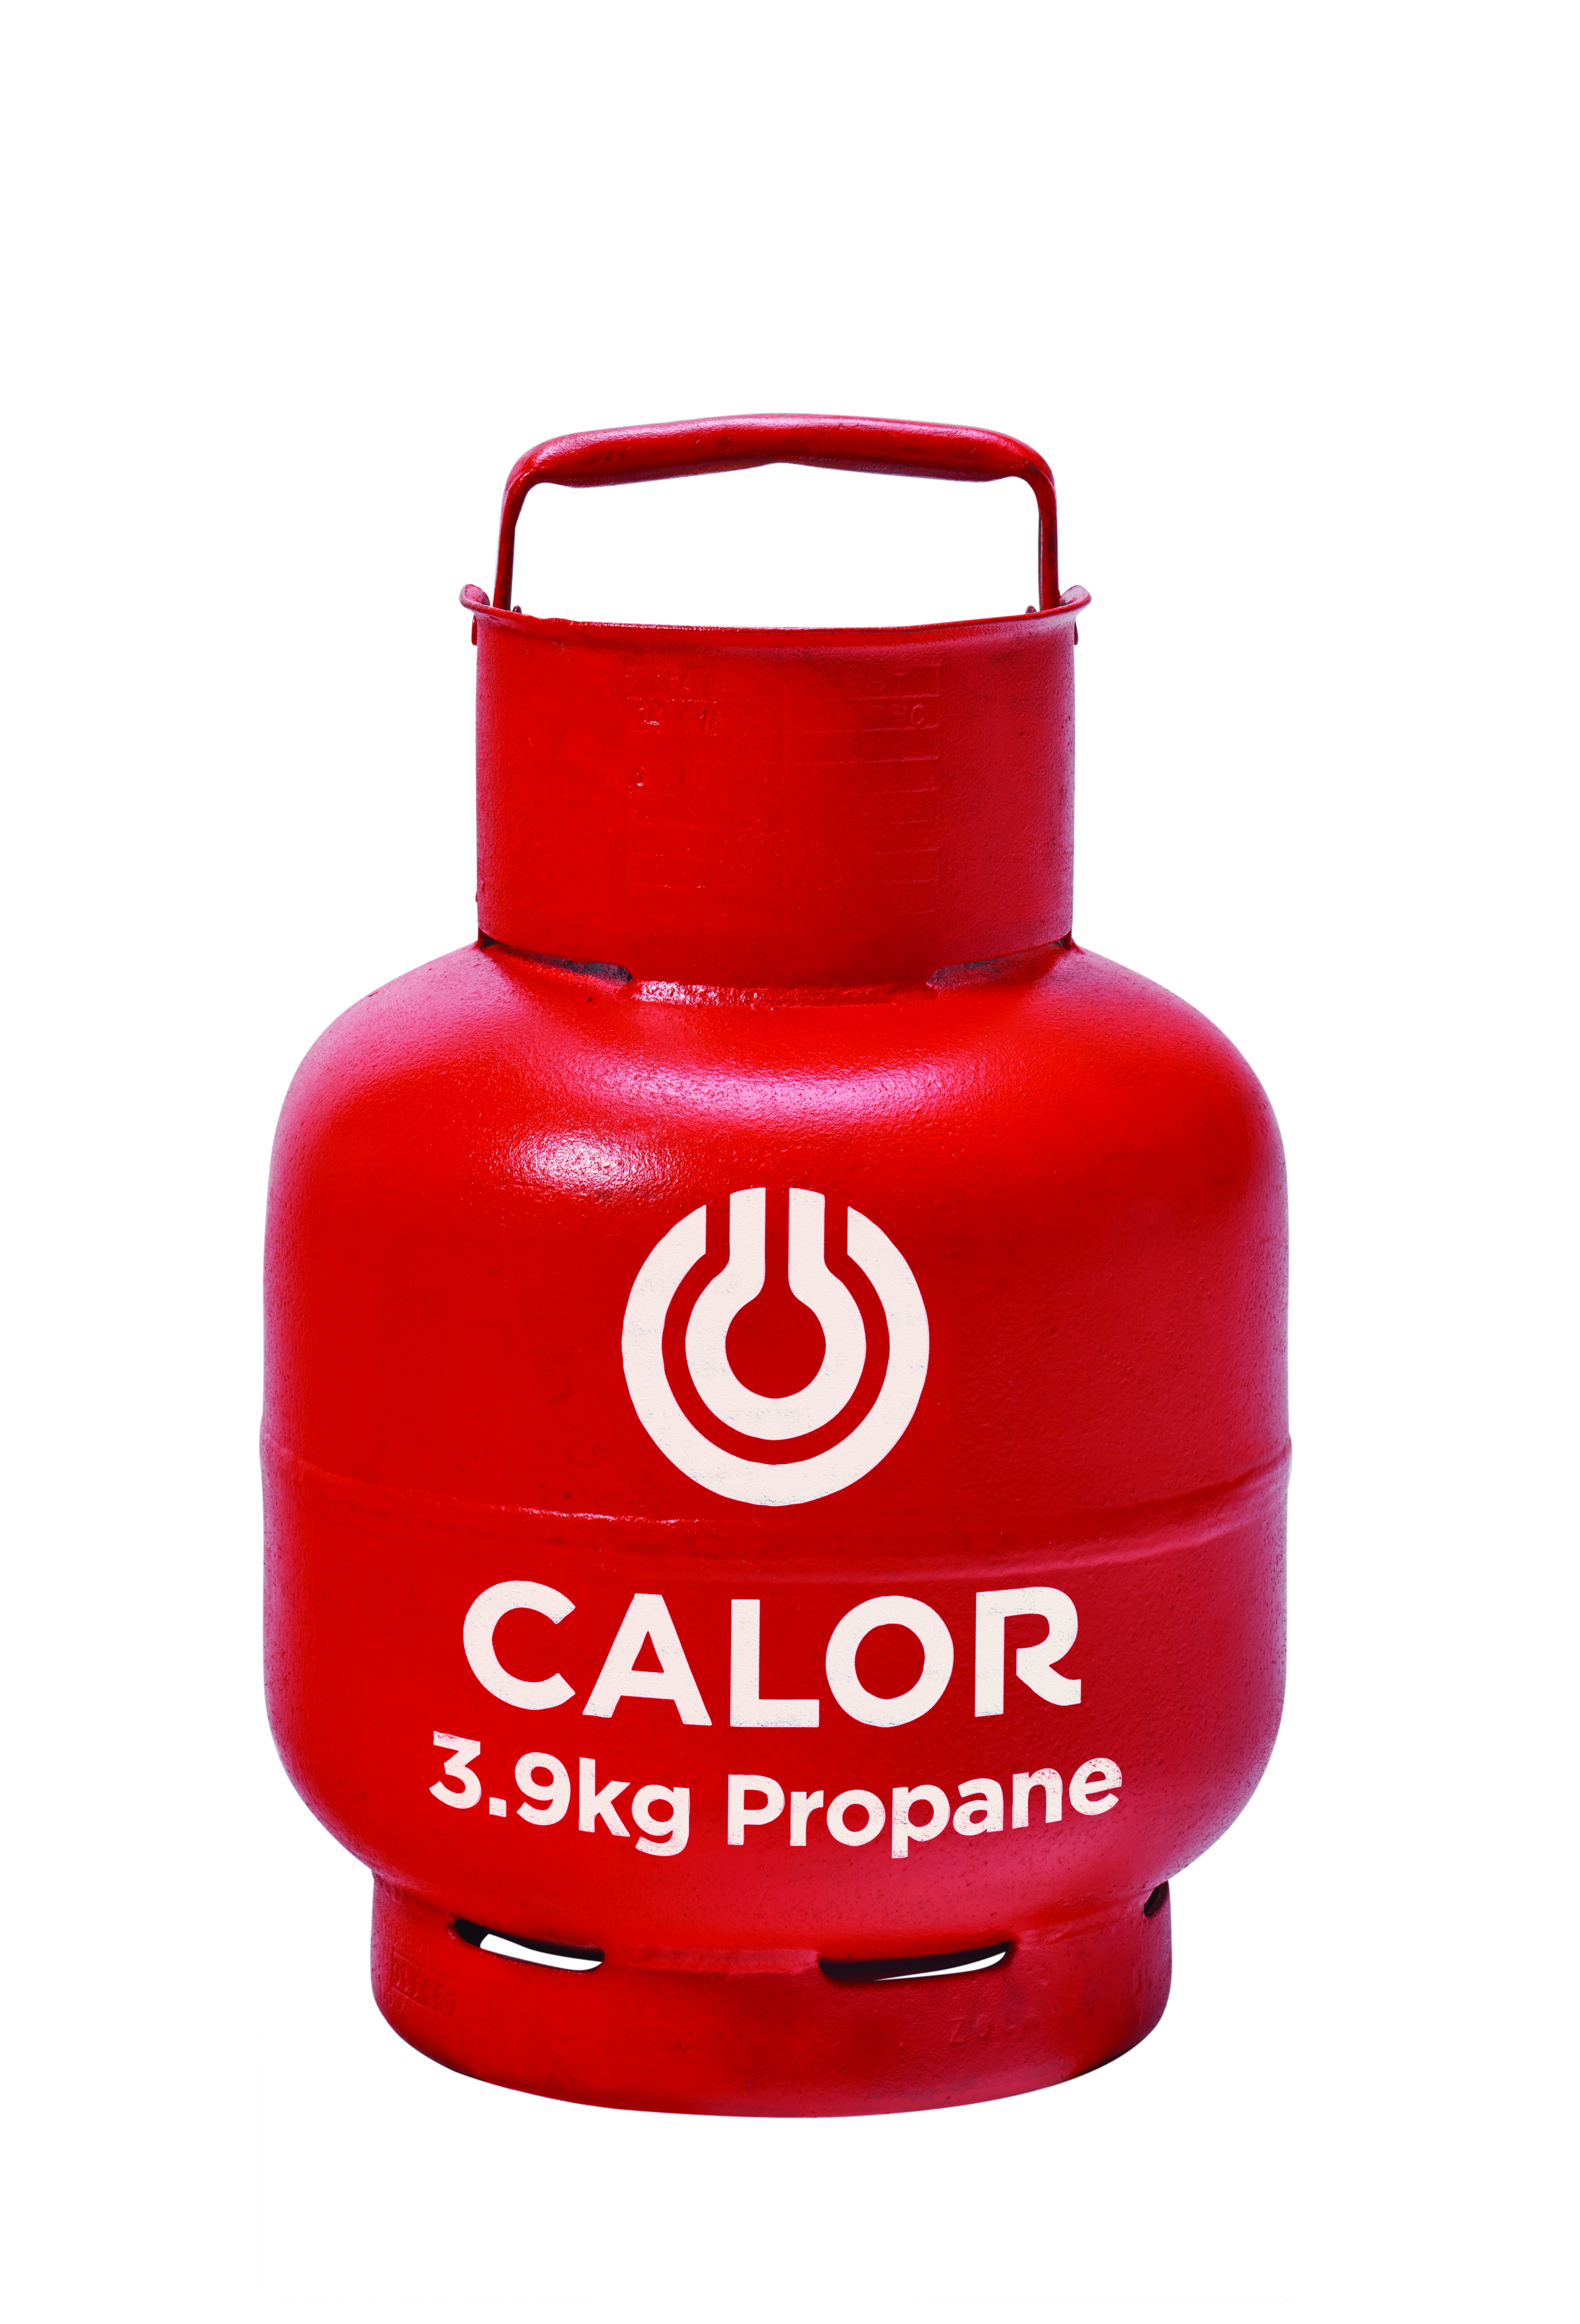 3.9kg Propane Calor Gas Bottles Hove